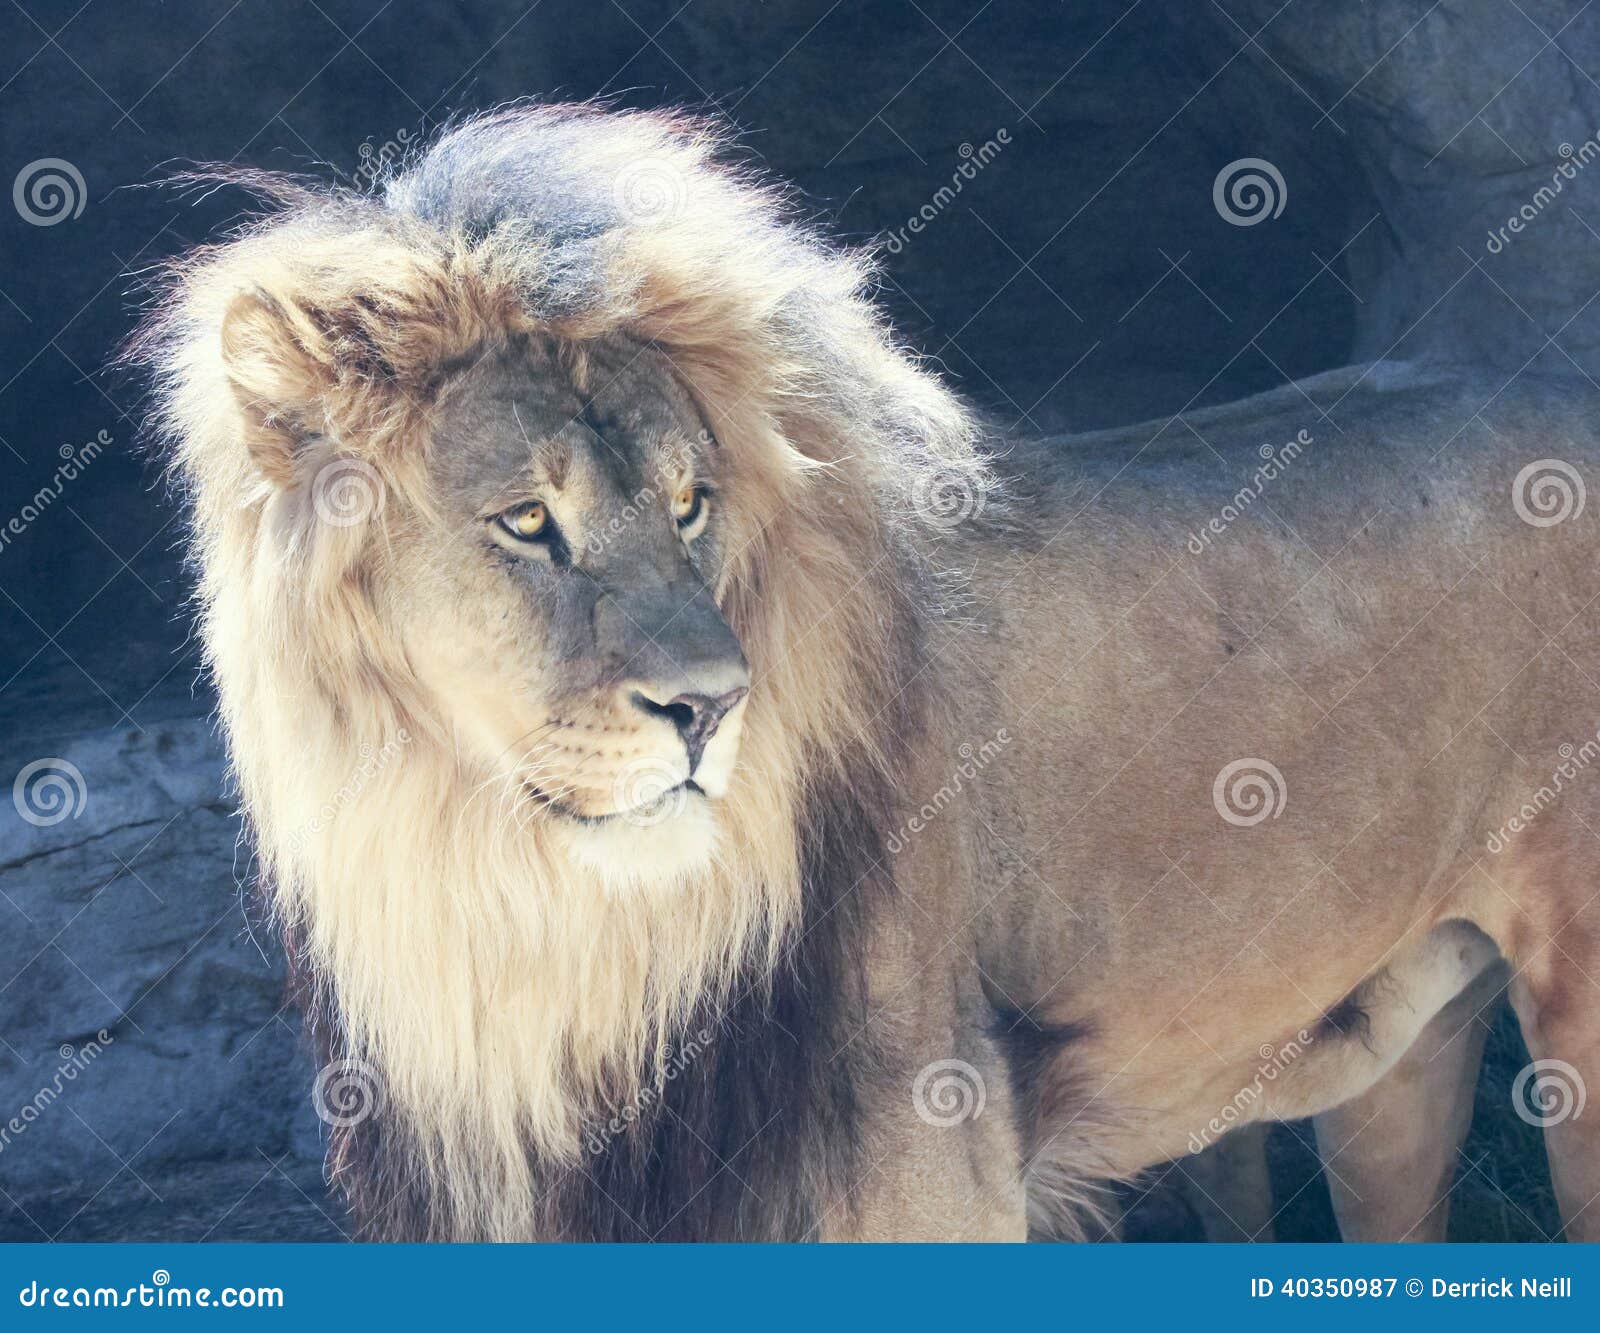 a male lion with a sunlit mane